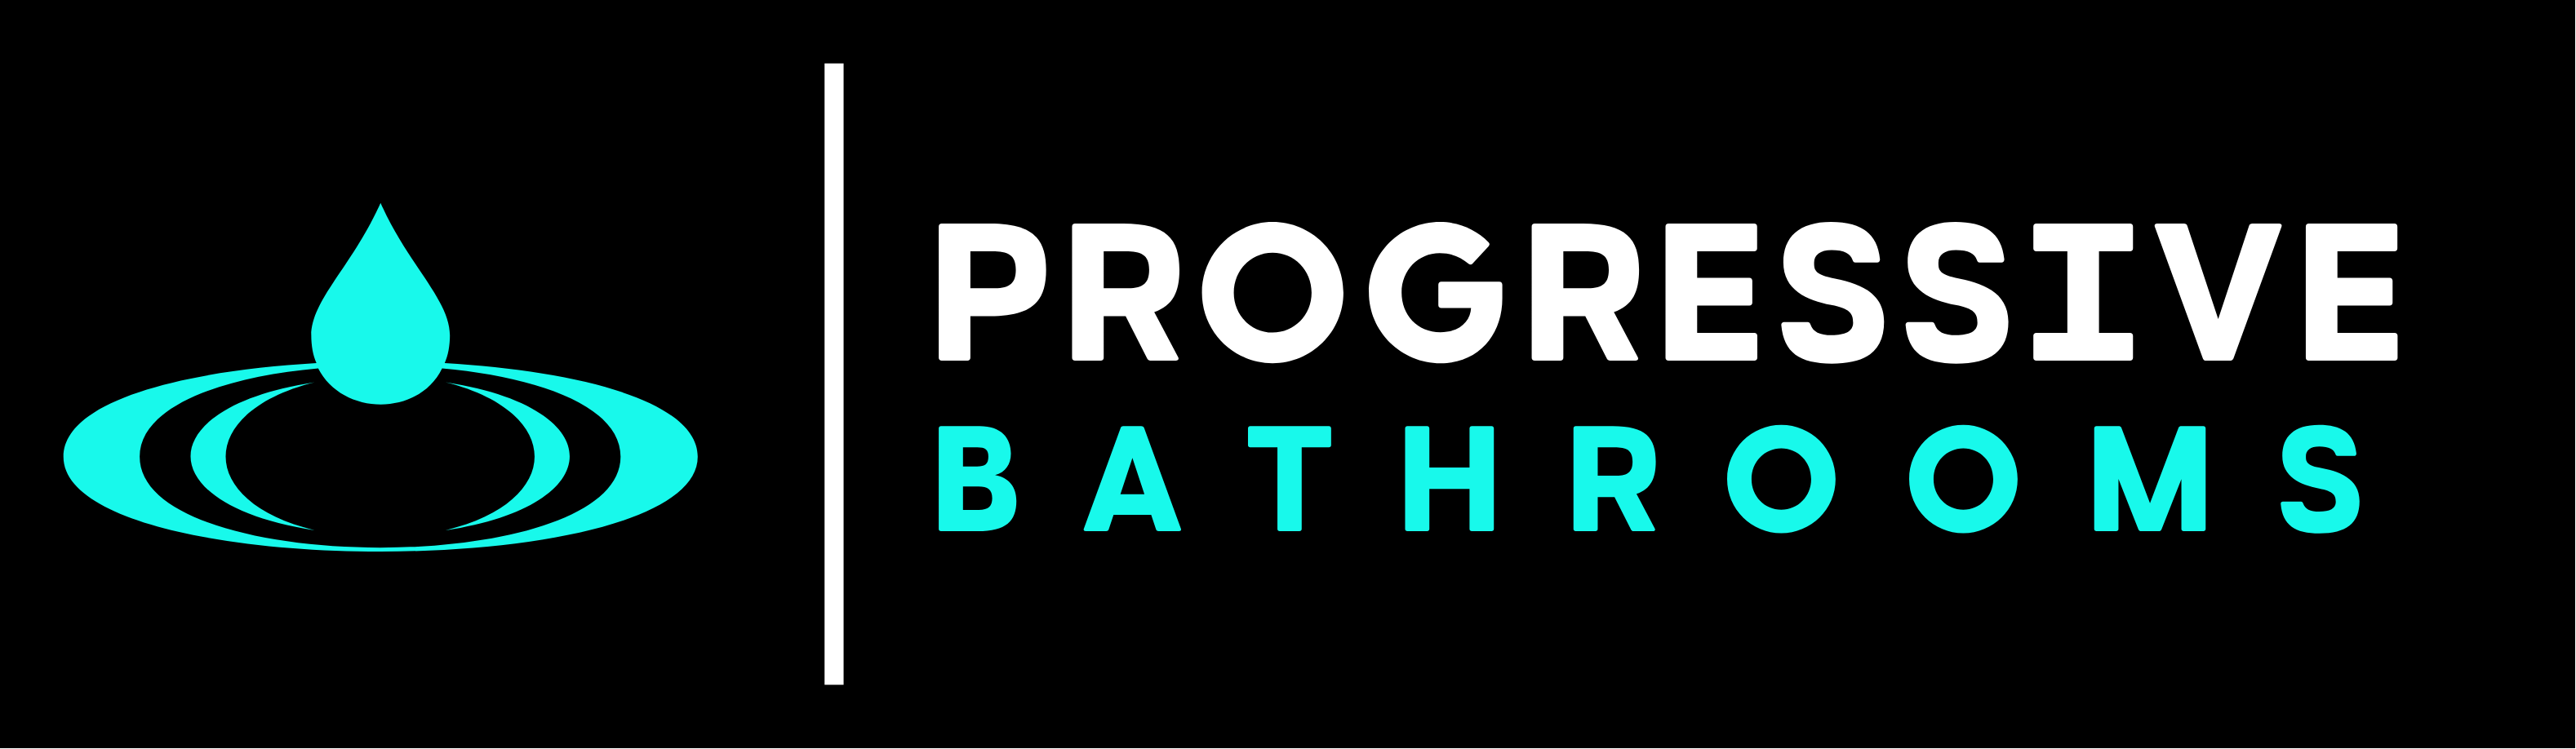 Color-logo-with-background-Progressive-Bathroom-Renovations.png